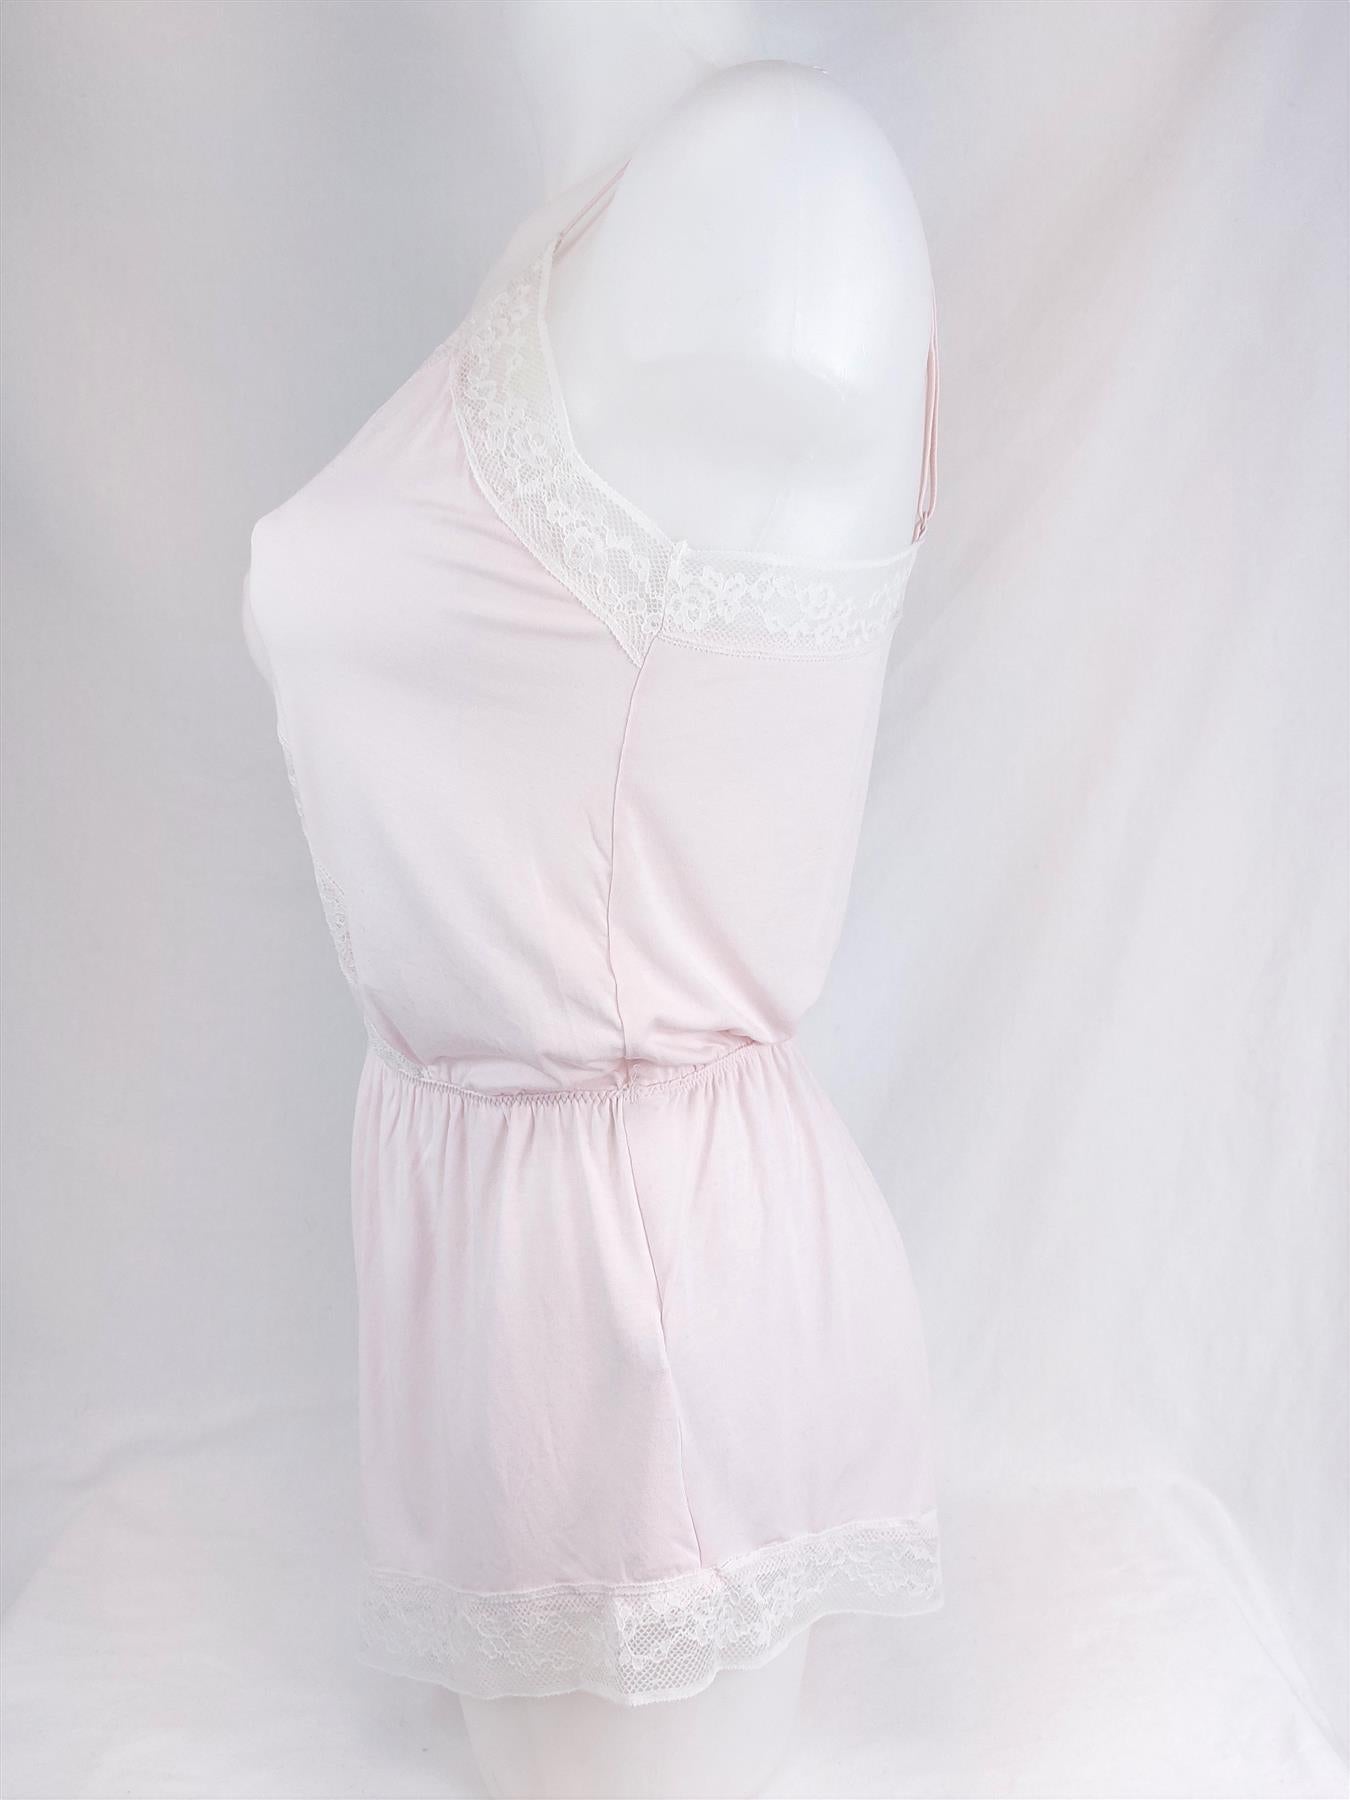 Women's Supersoft Teddy Body Playsuit Pyjama Sleepwear Lace Trim Pale Pink